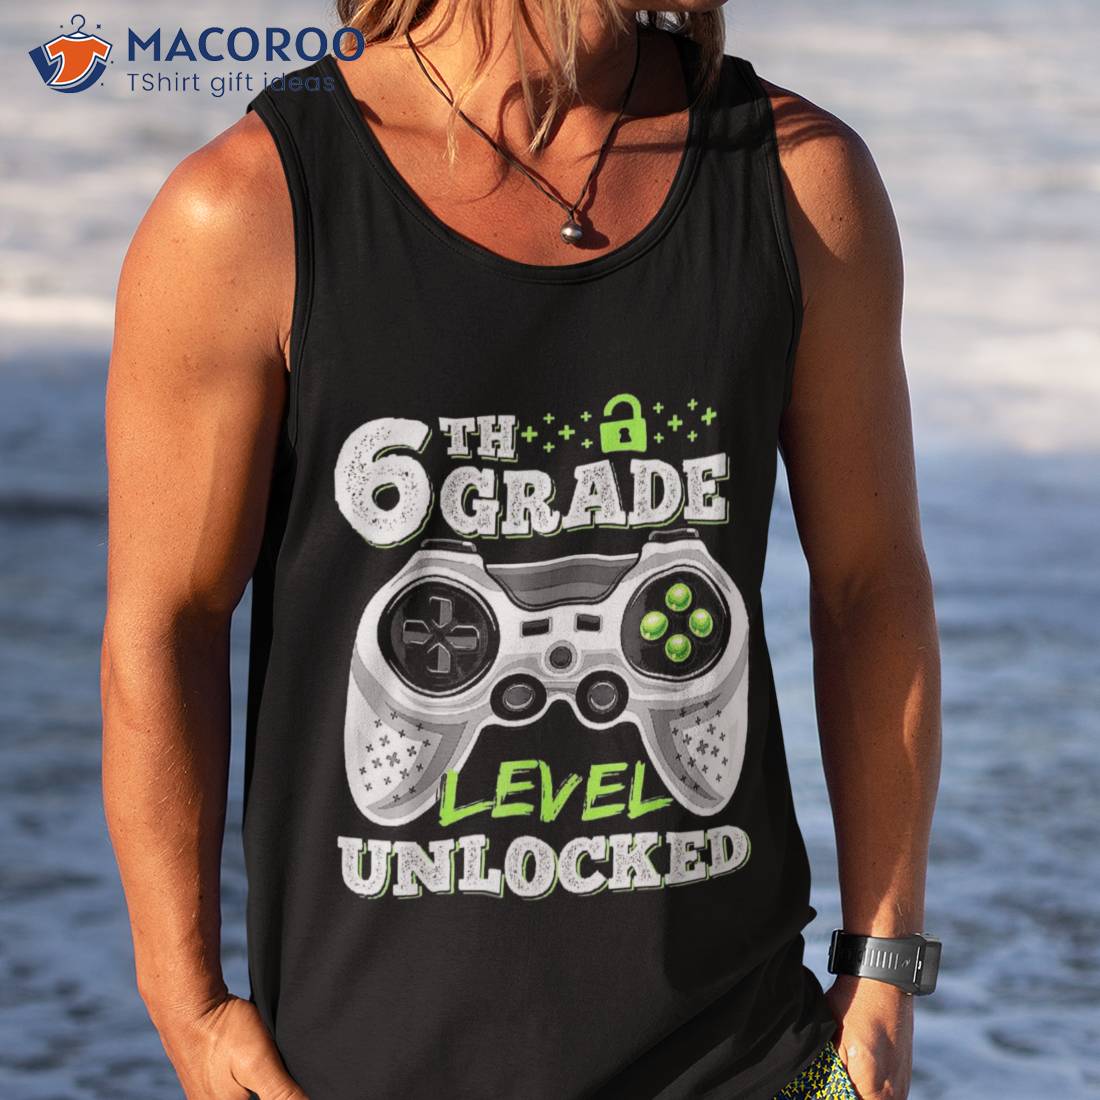 Kids Level 6 Unlocked 6Th Birthday 6 Year Old Boy Gifts Gamer T Shirts,  Hoodies, Sweatshirts & Merch